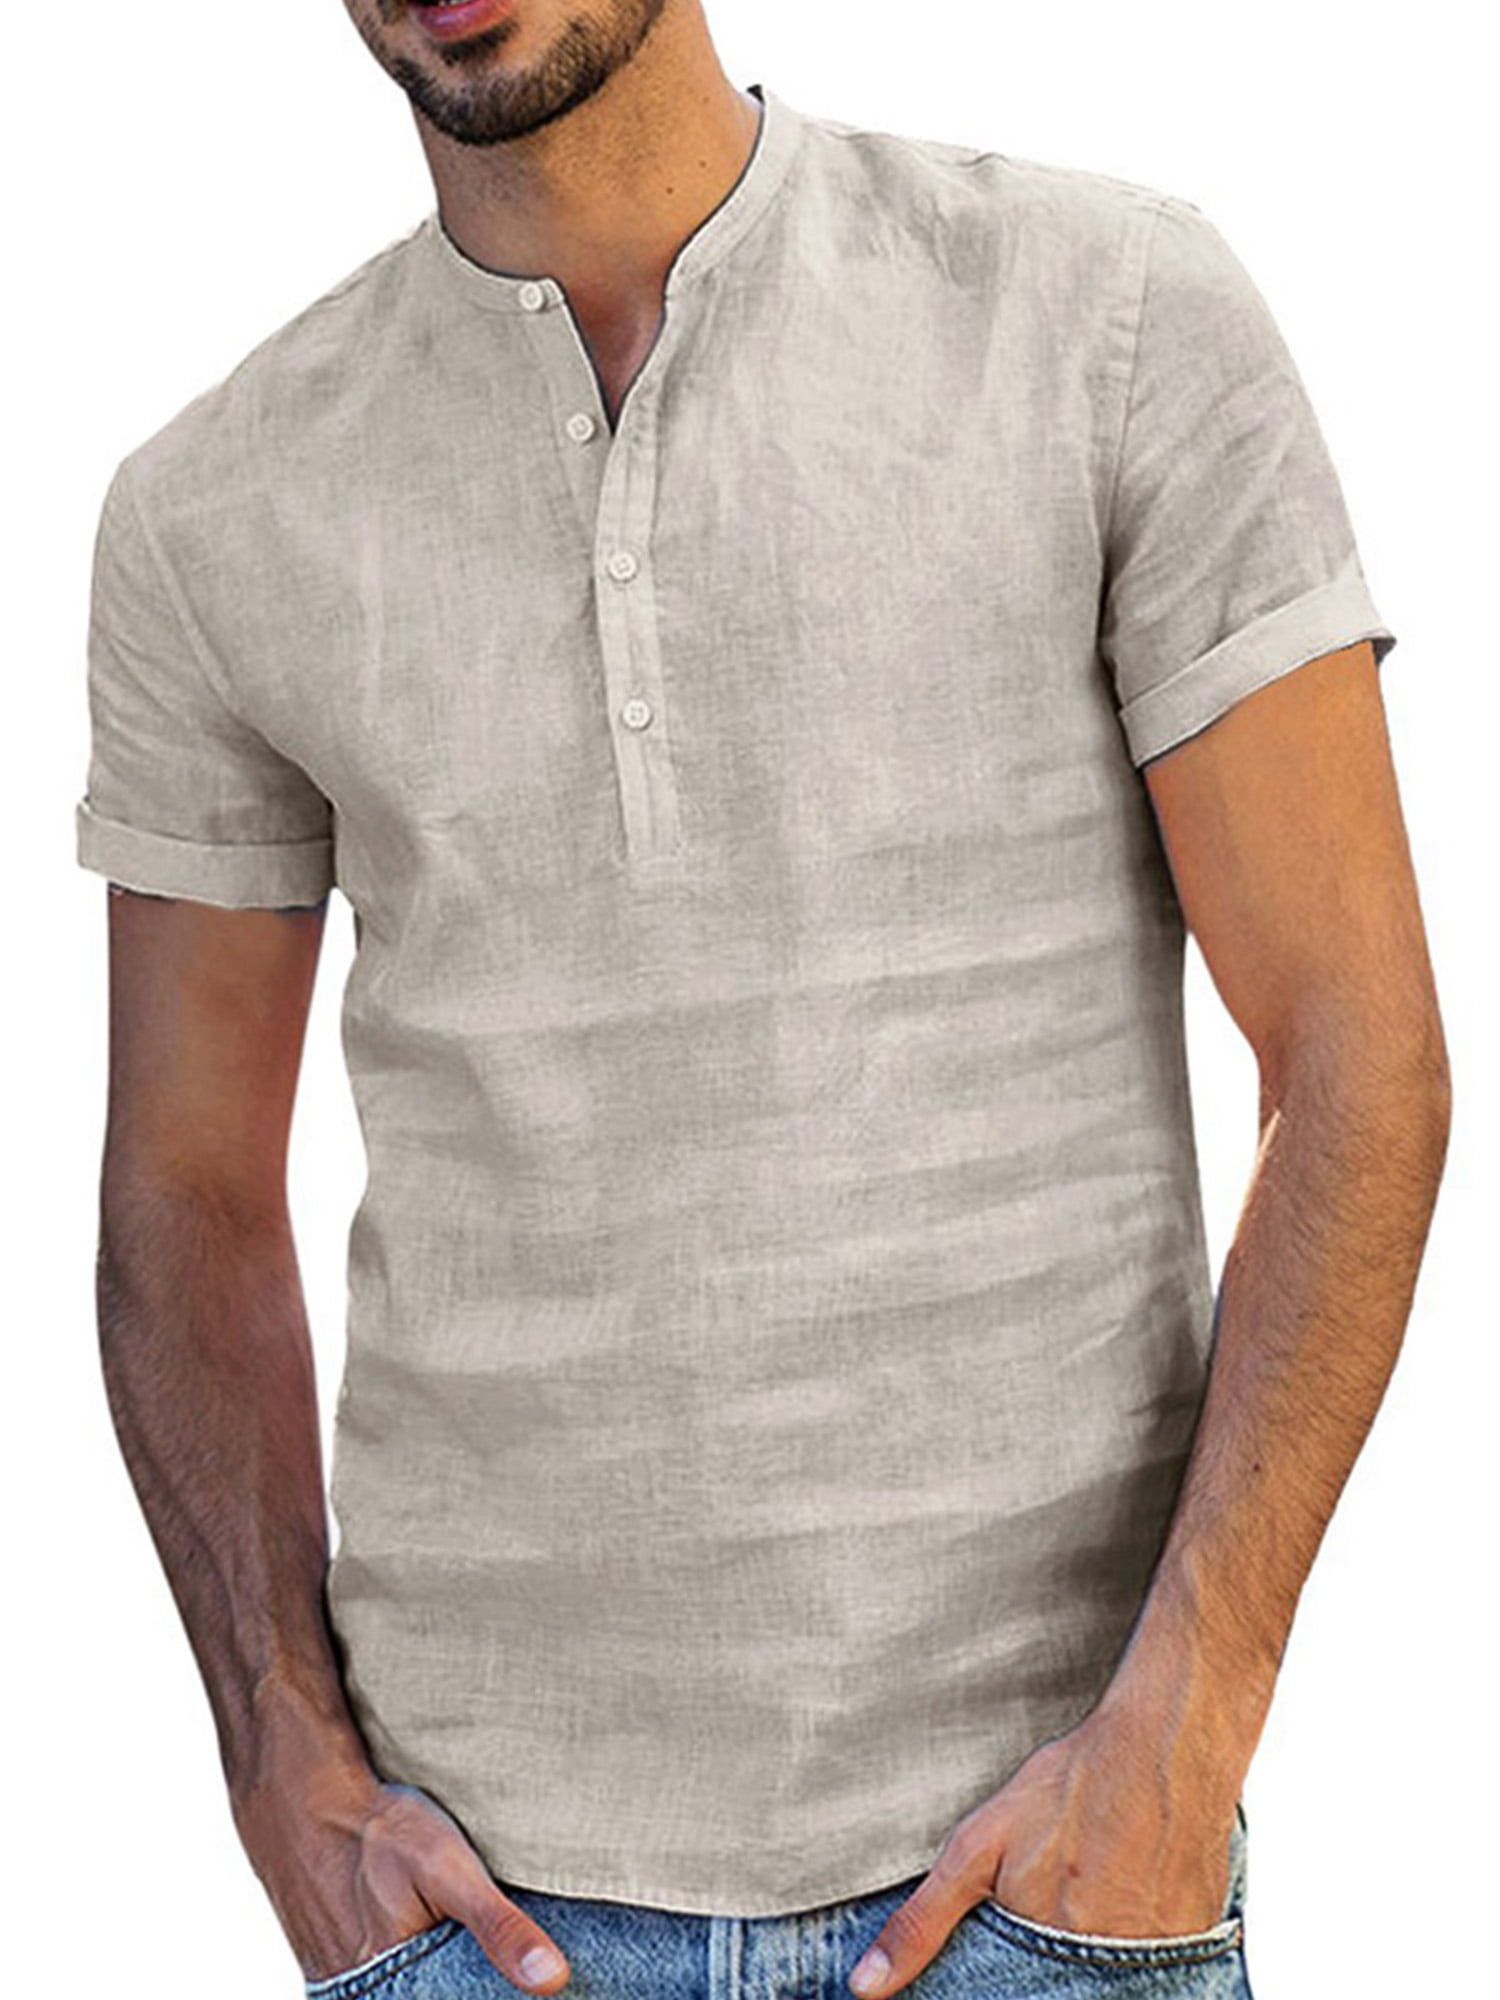 Summer Men's Cotton Linen T-Shirt Short Sleeve Basic Tee Slim Fit Casual Tops